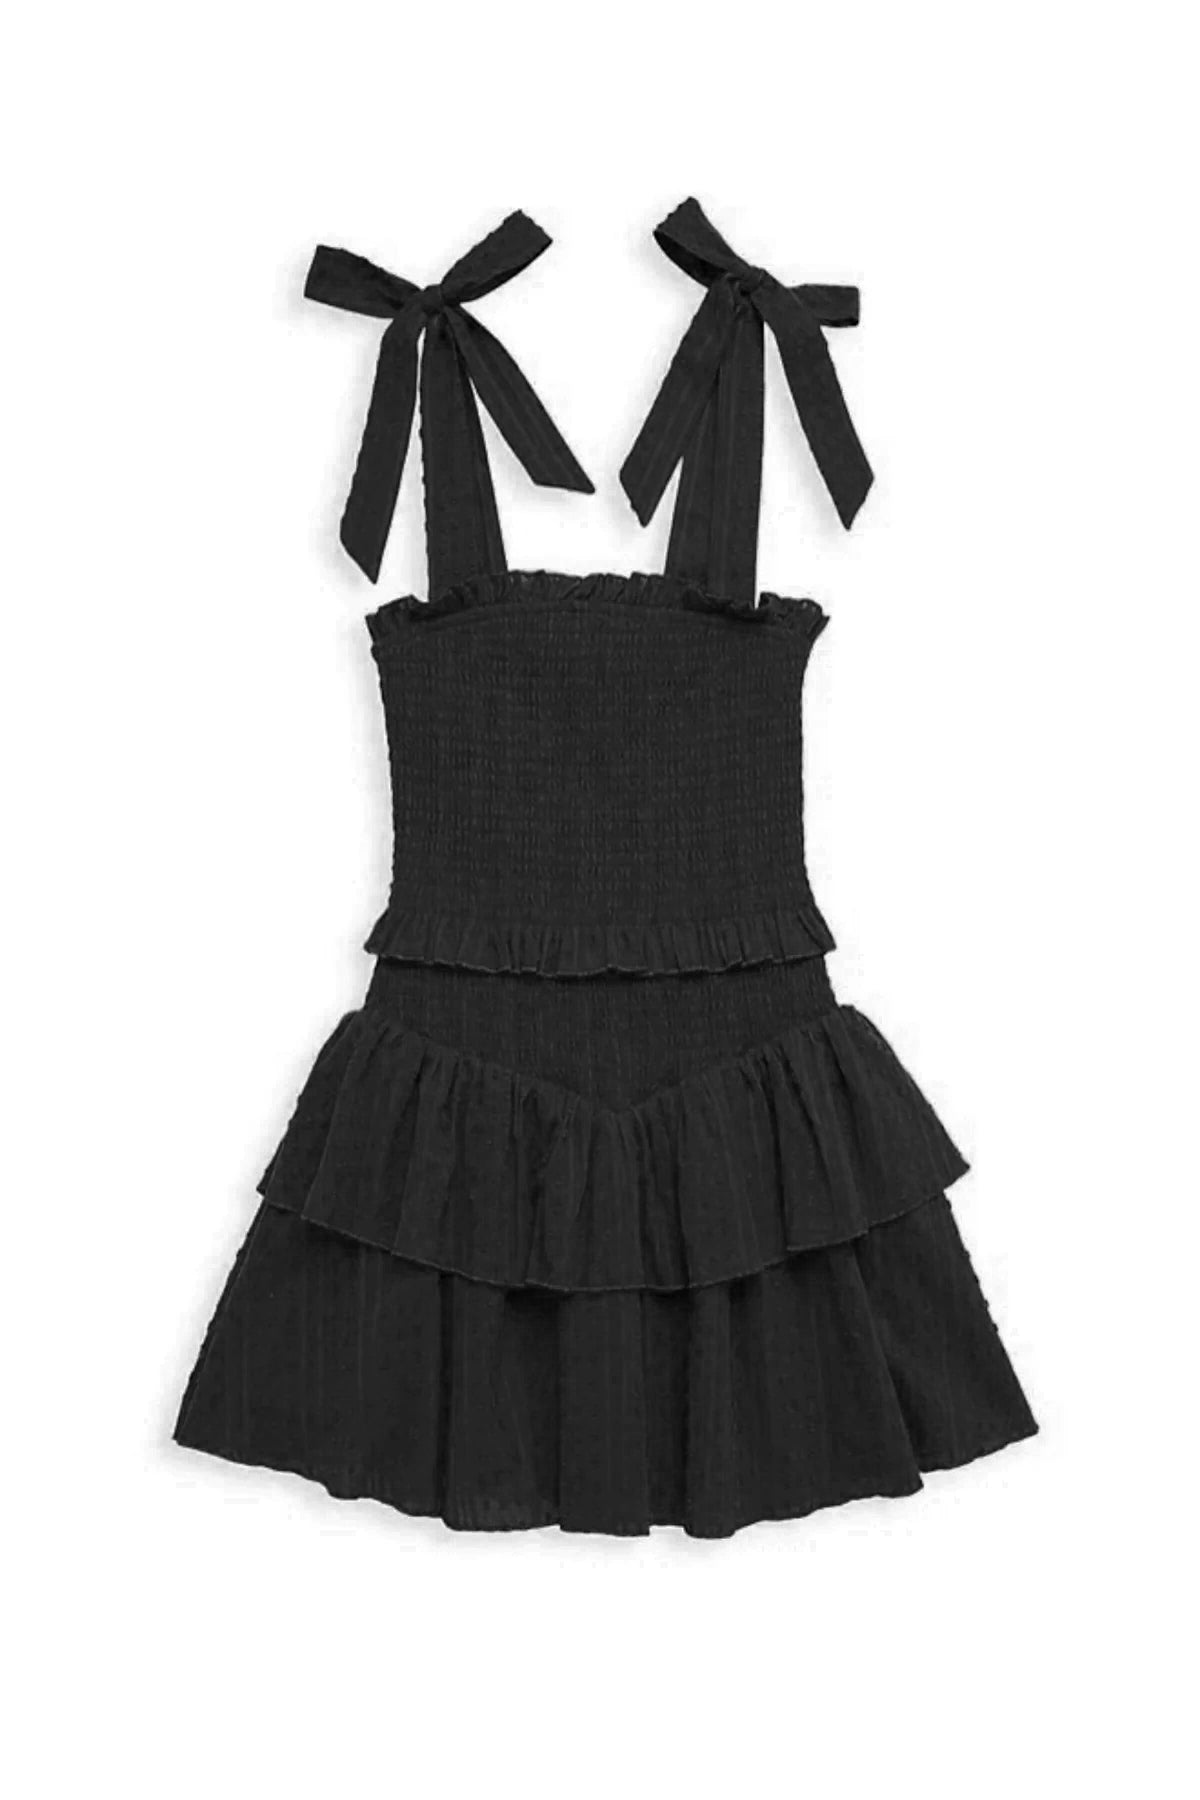 KatieJ NYC - Tween - Black Emerson Dress